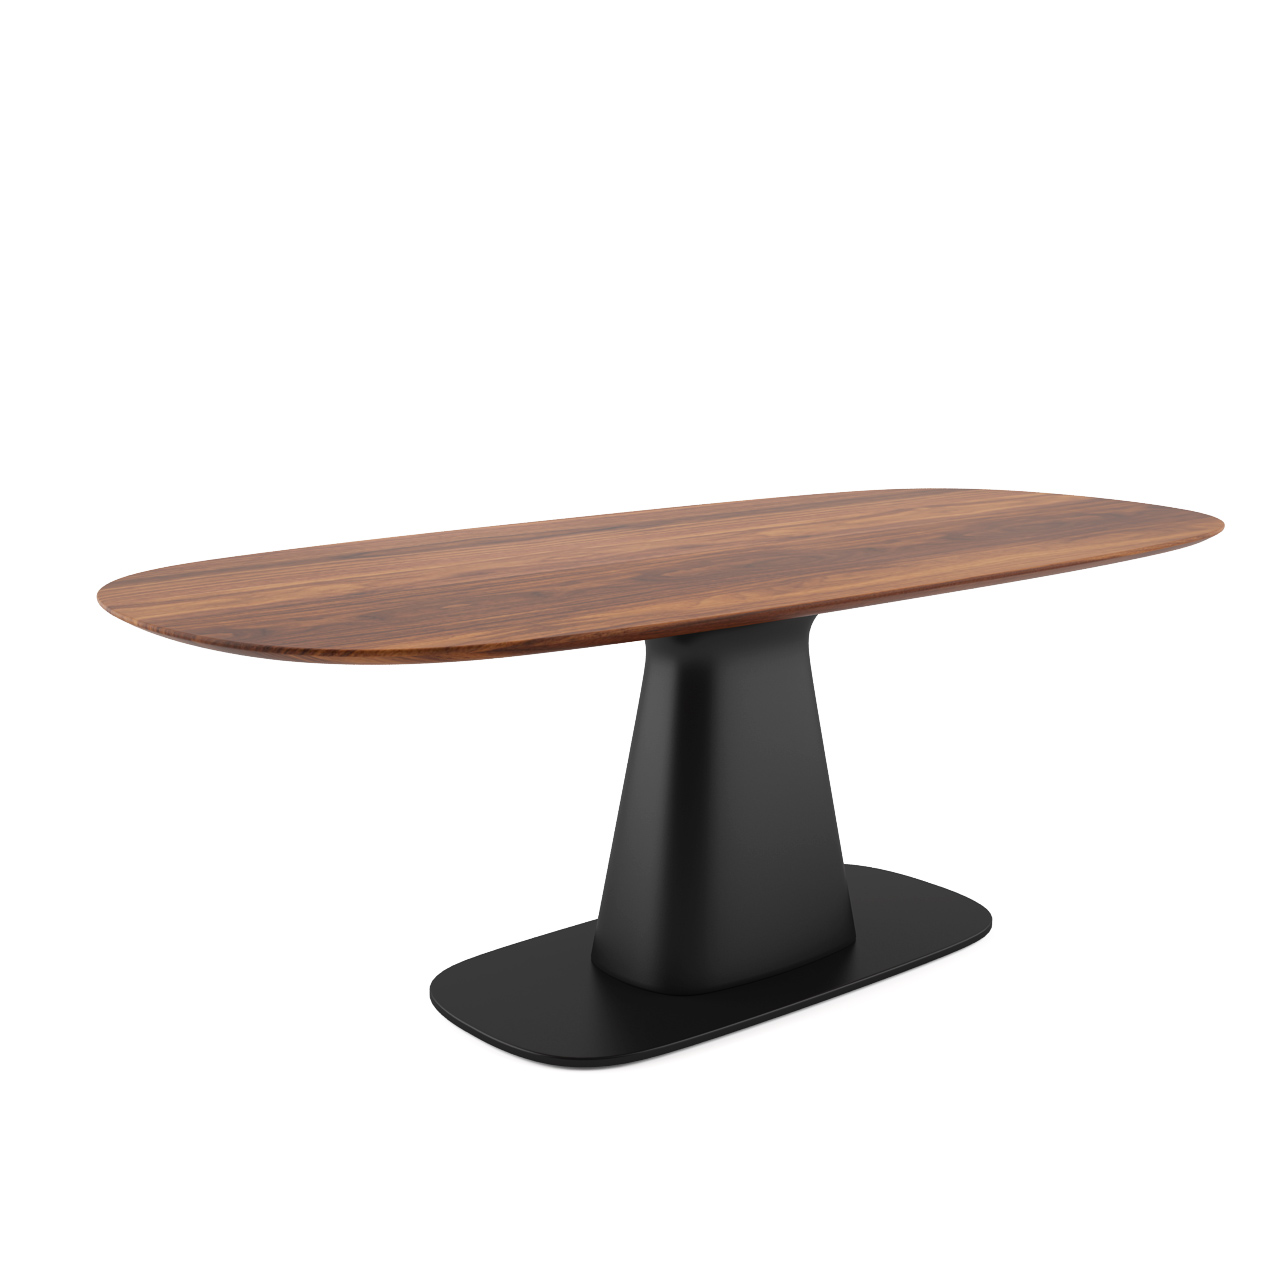 نشيط من حين اخر كولونيل  8950 Dining Table by Rolf Benz - Dimensiva | 3d models of great design